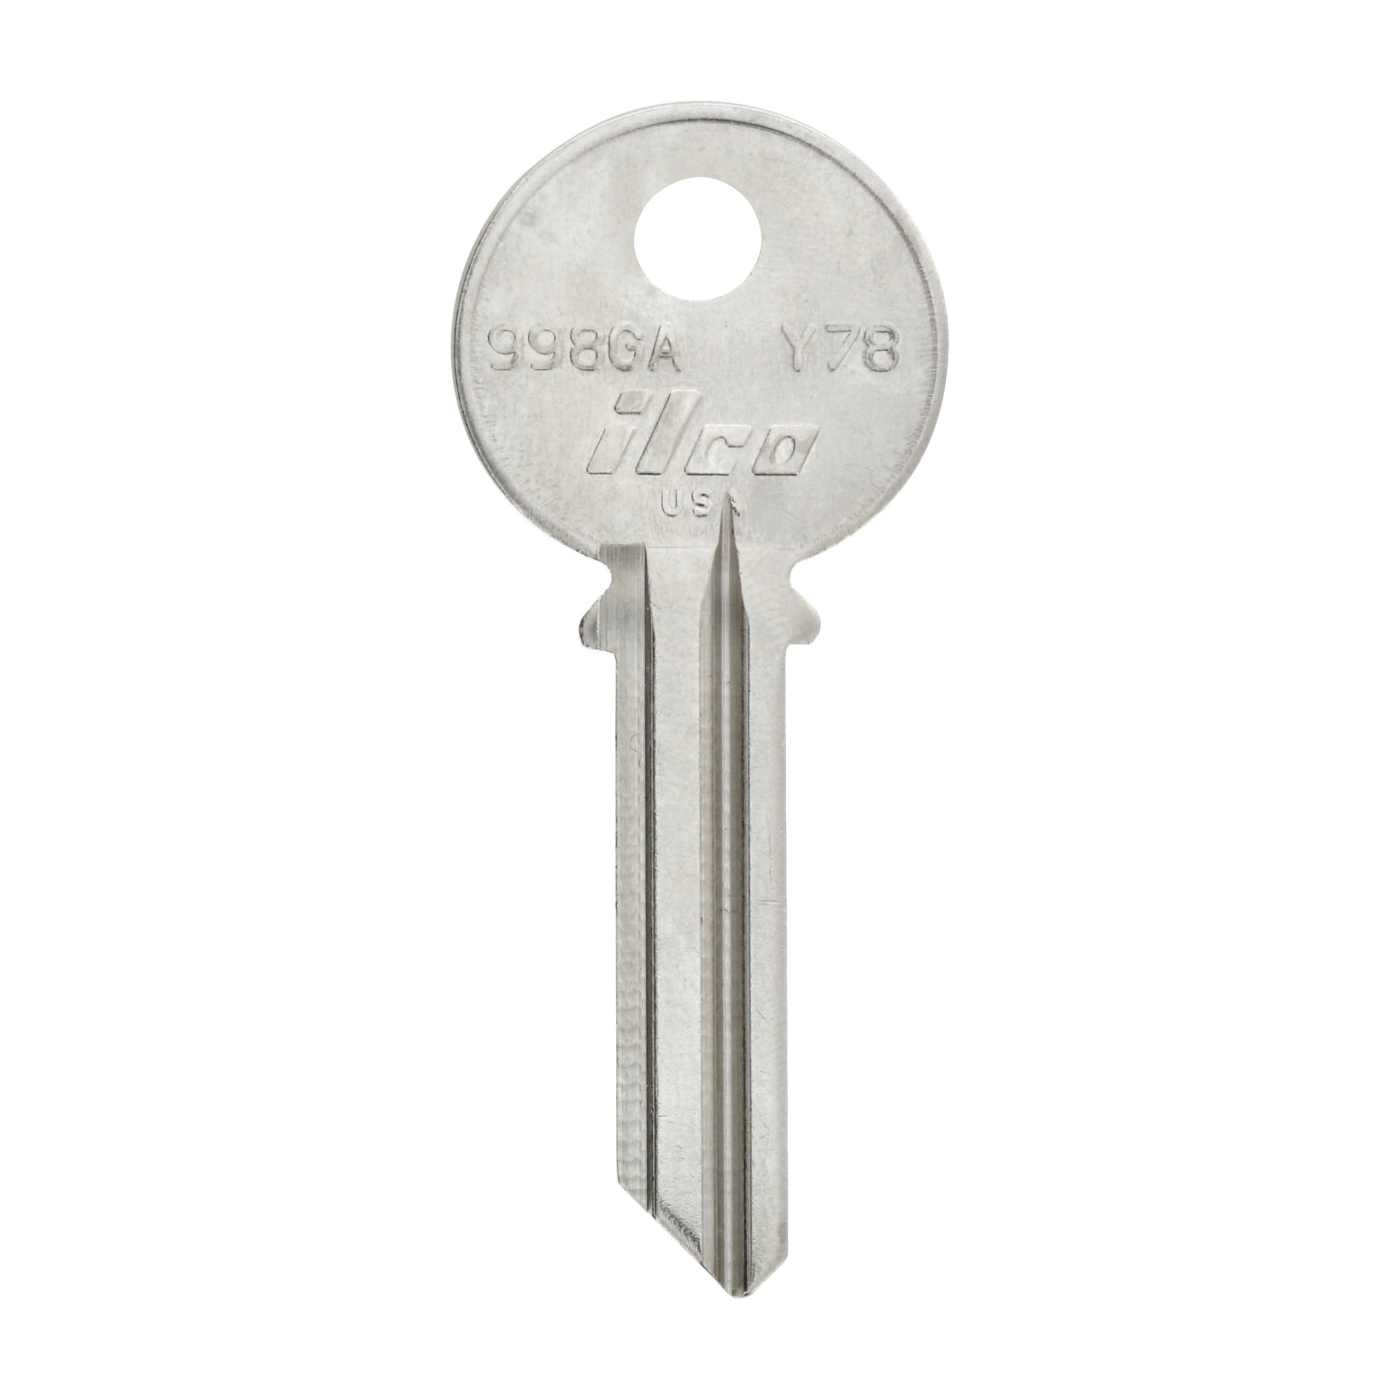 Hillman 88616 Key Blank, Brass, For: Yale Locks